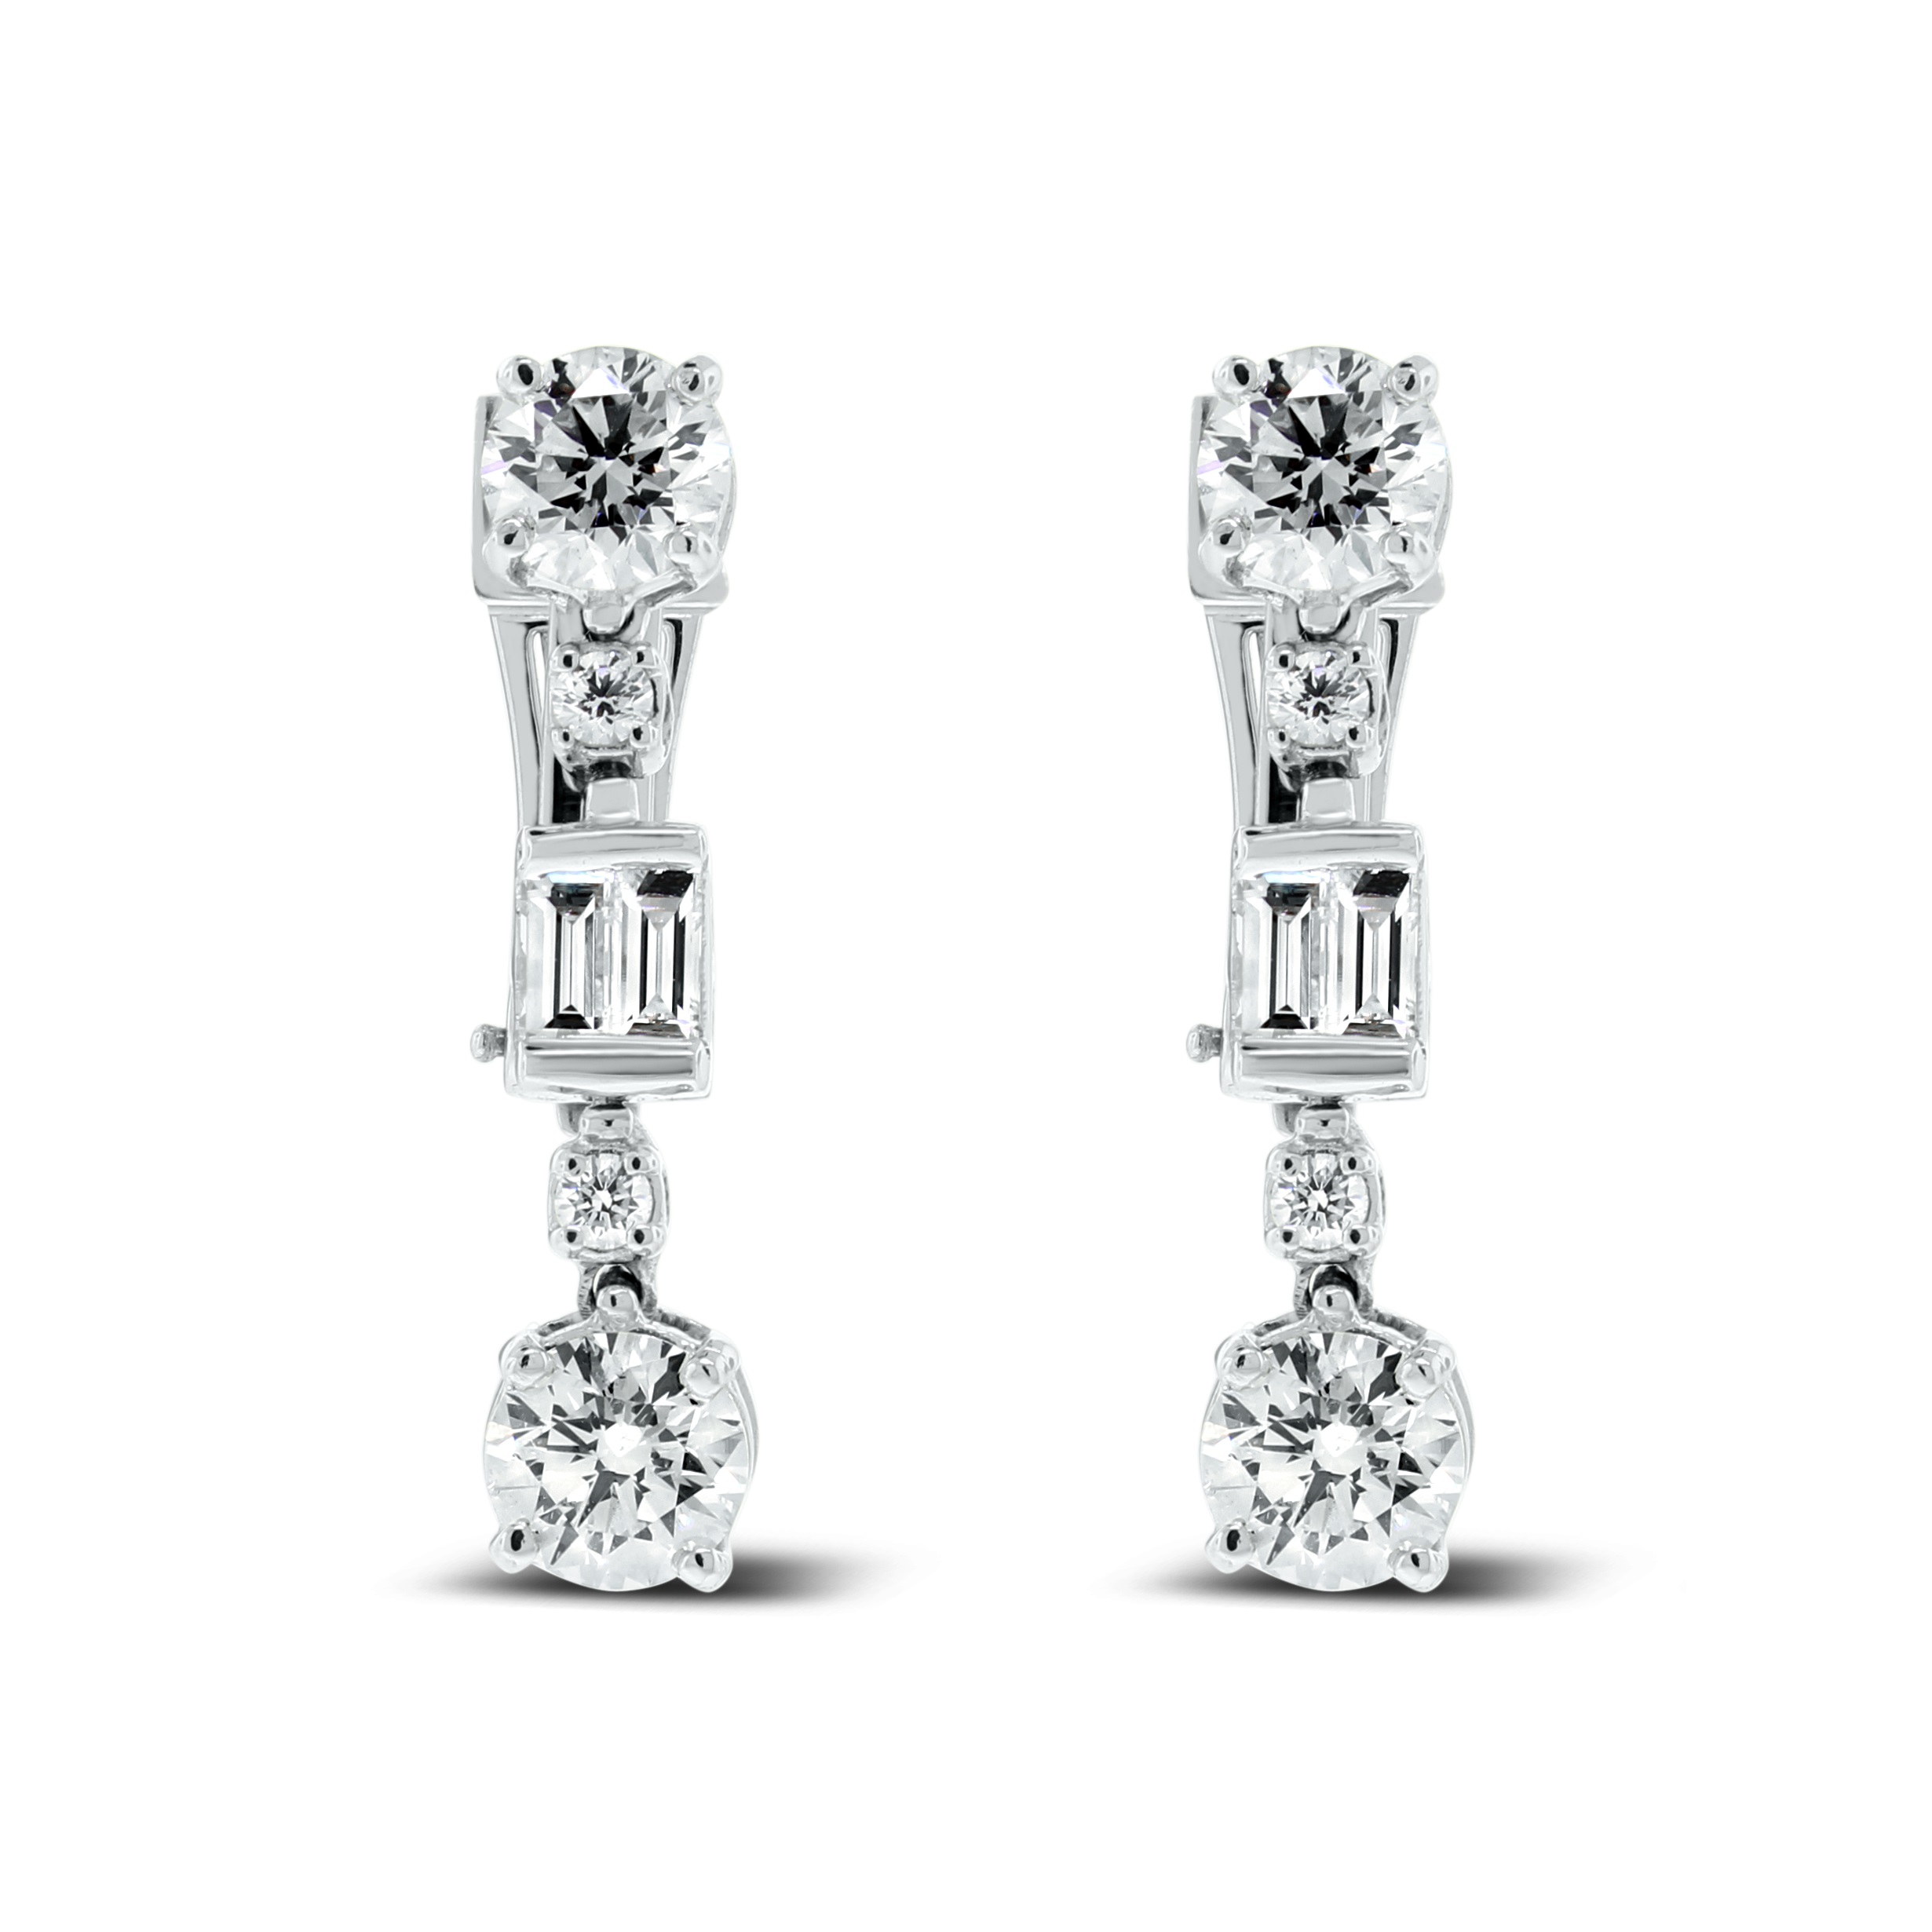 Beauvince Azea Diamond Earrings. 3.71 Carat Diamonds in White Gold